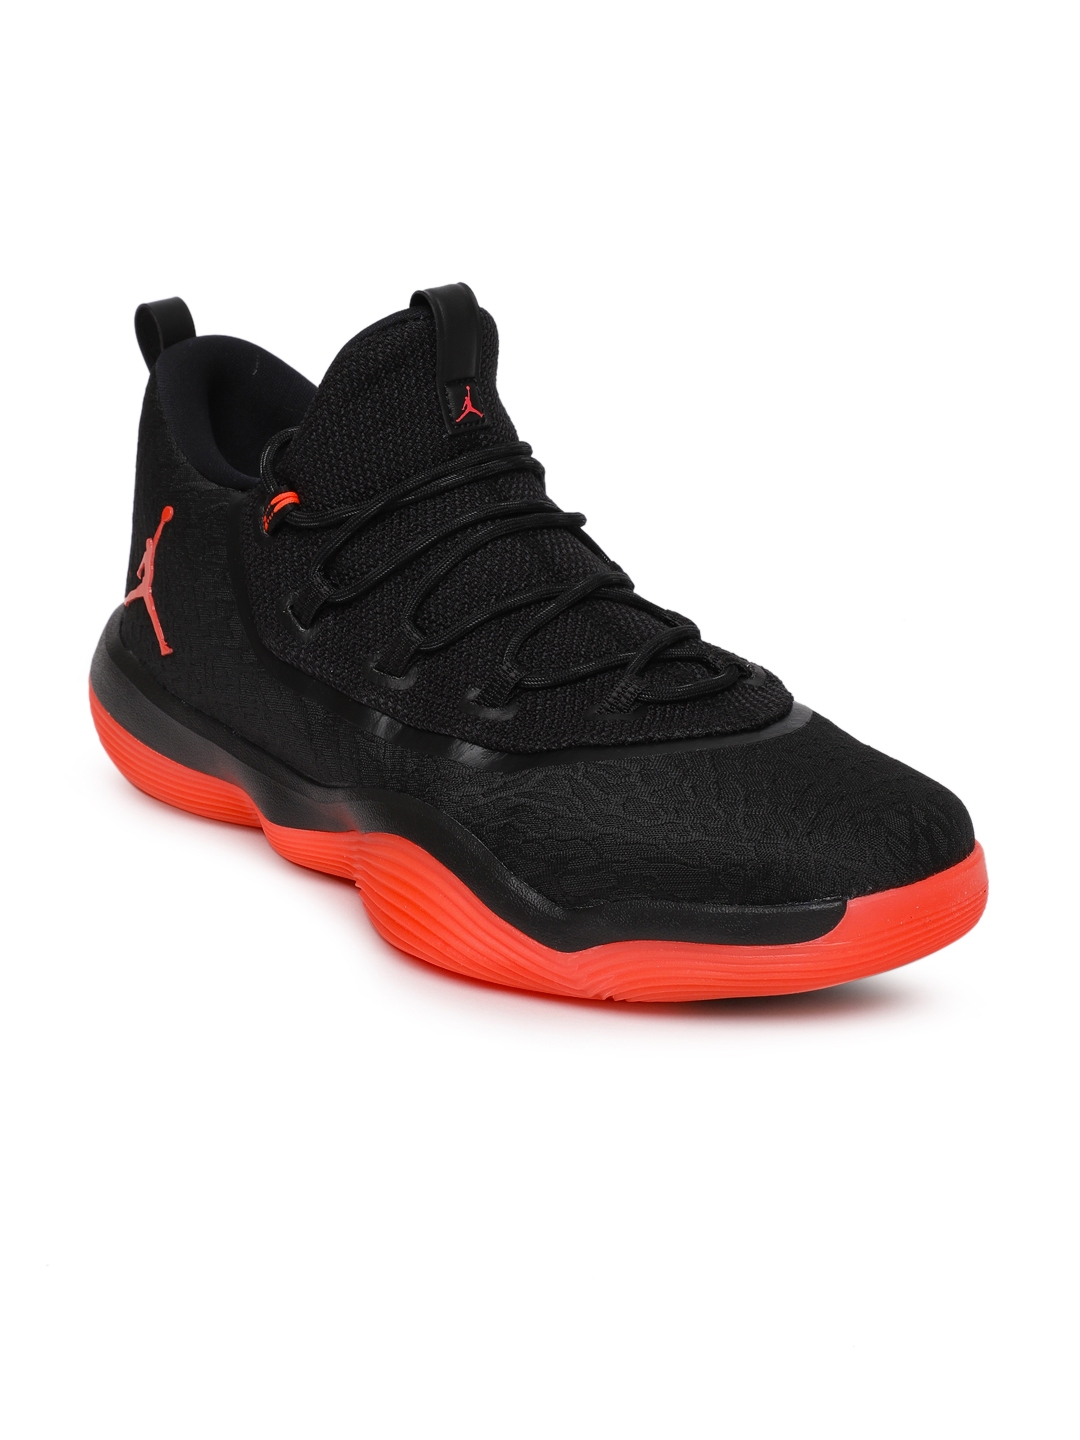 Buy Nike Men Black Textured Jordan Super.Fly 2017 Low Basketball Shoes - Sports Shoes for Men 4330959 |